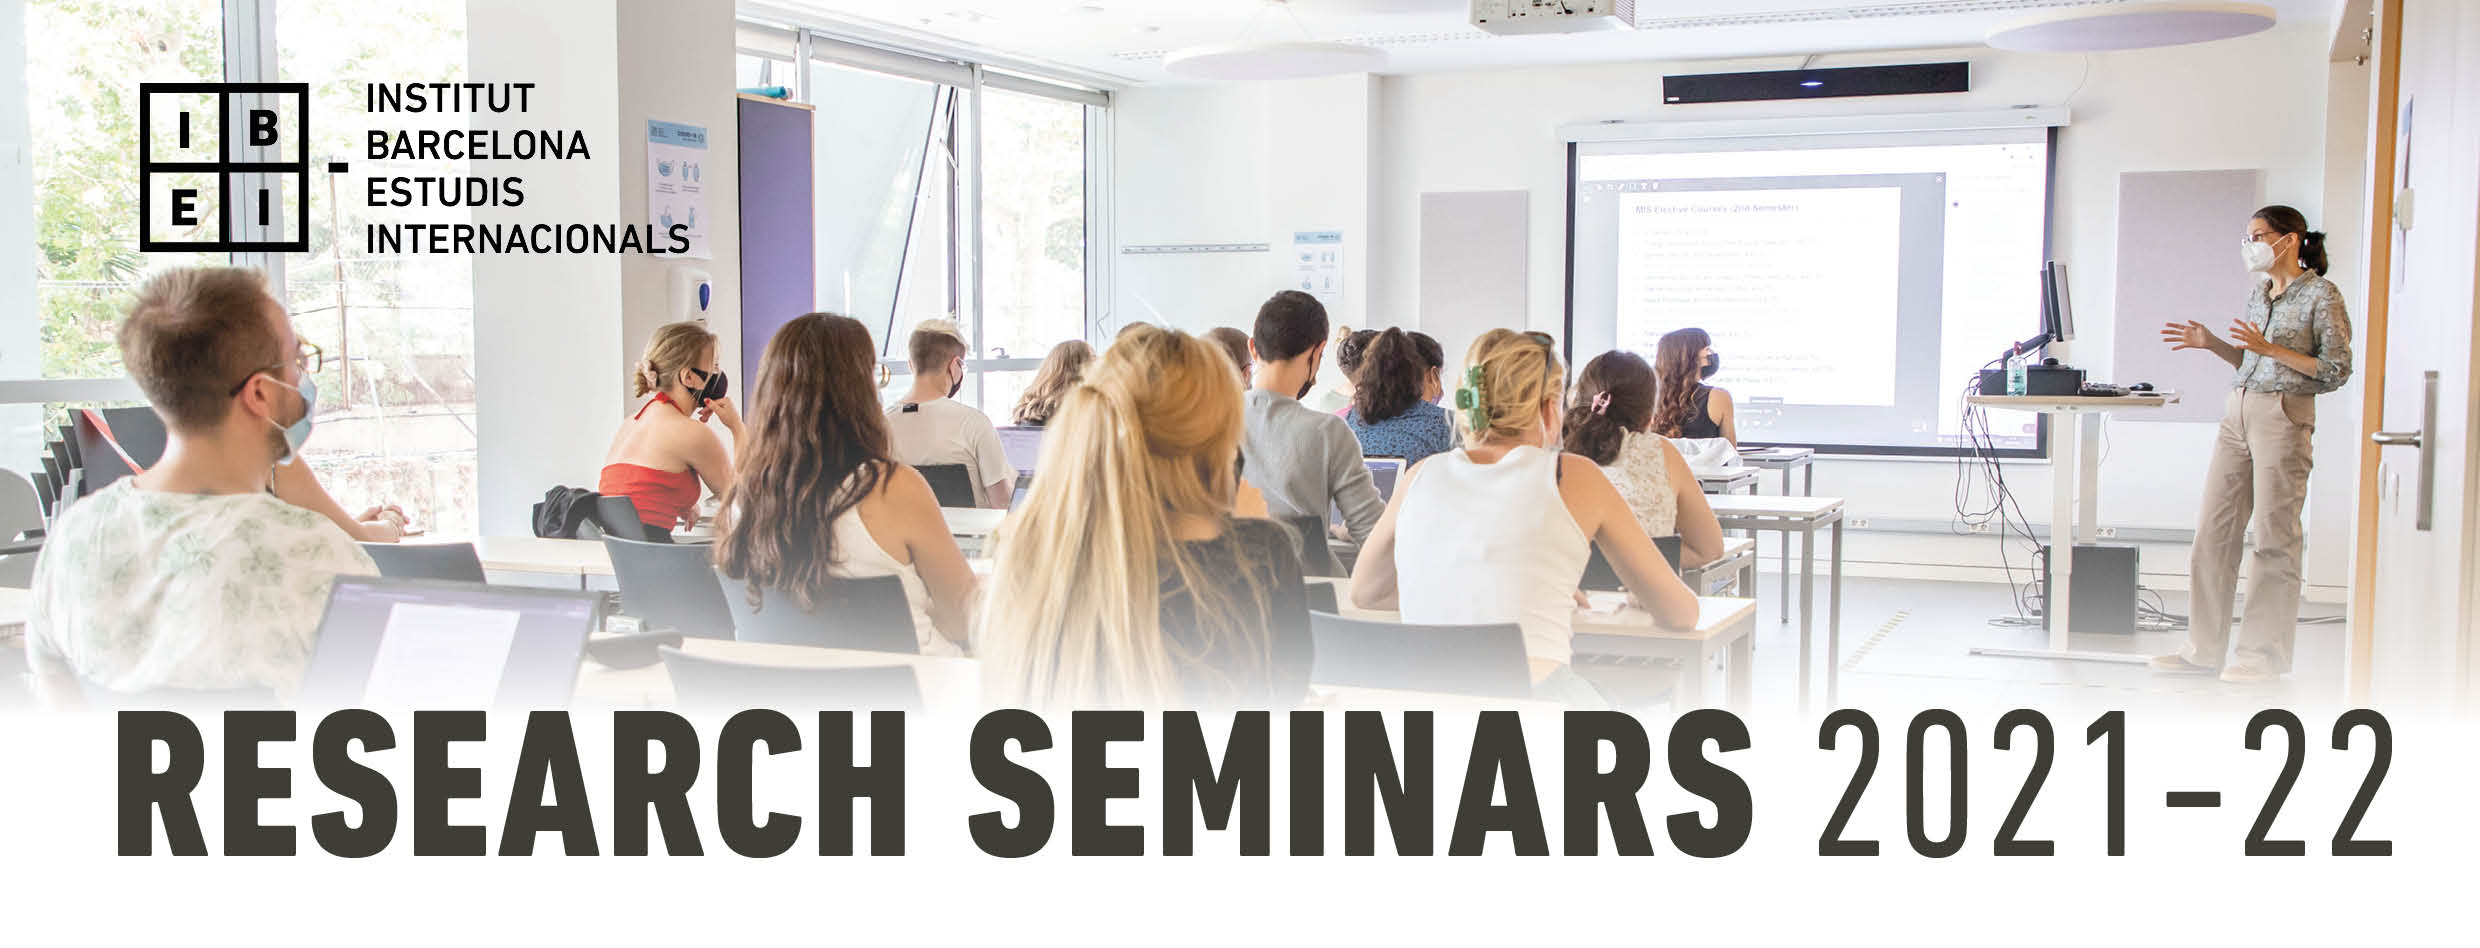 IBEI Research Seminars 2021-22